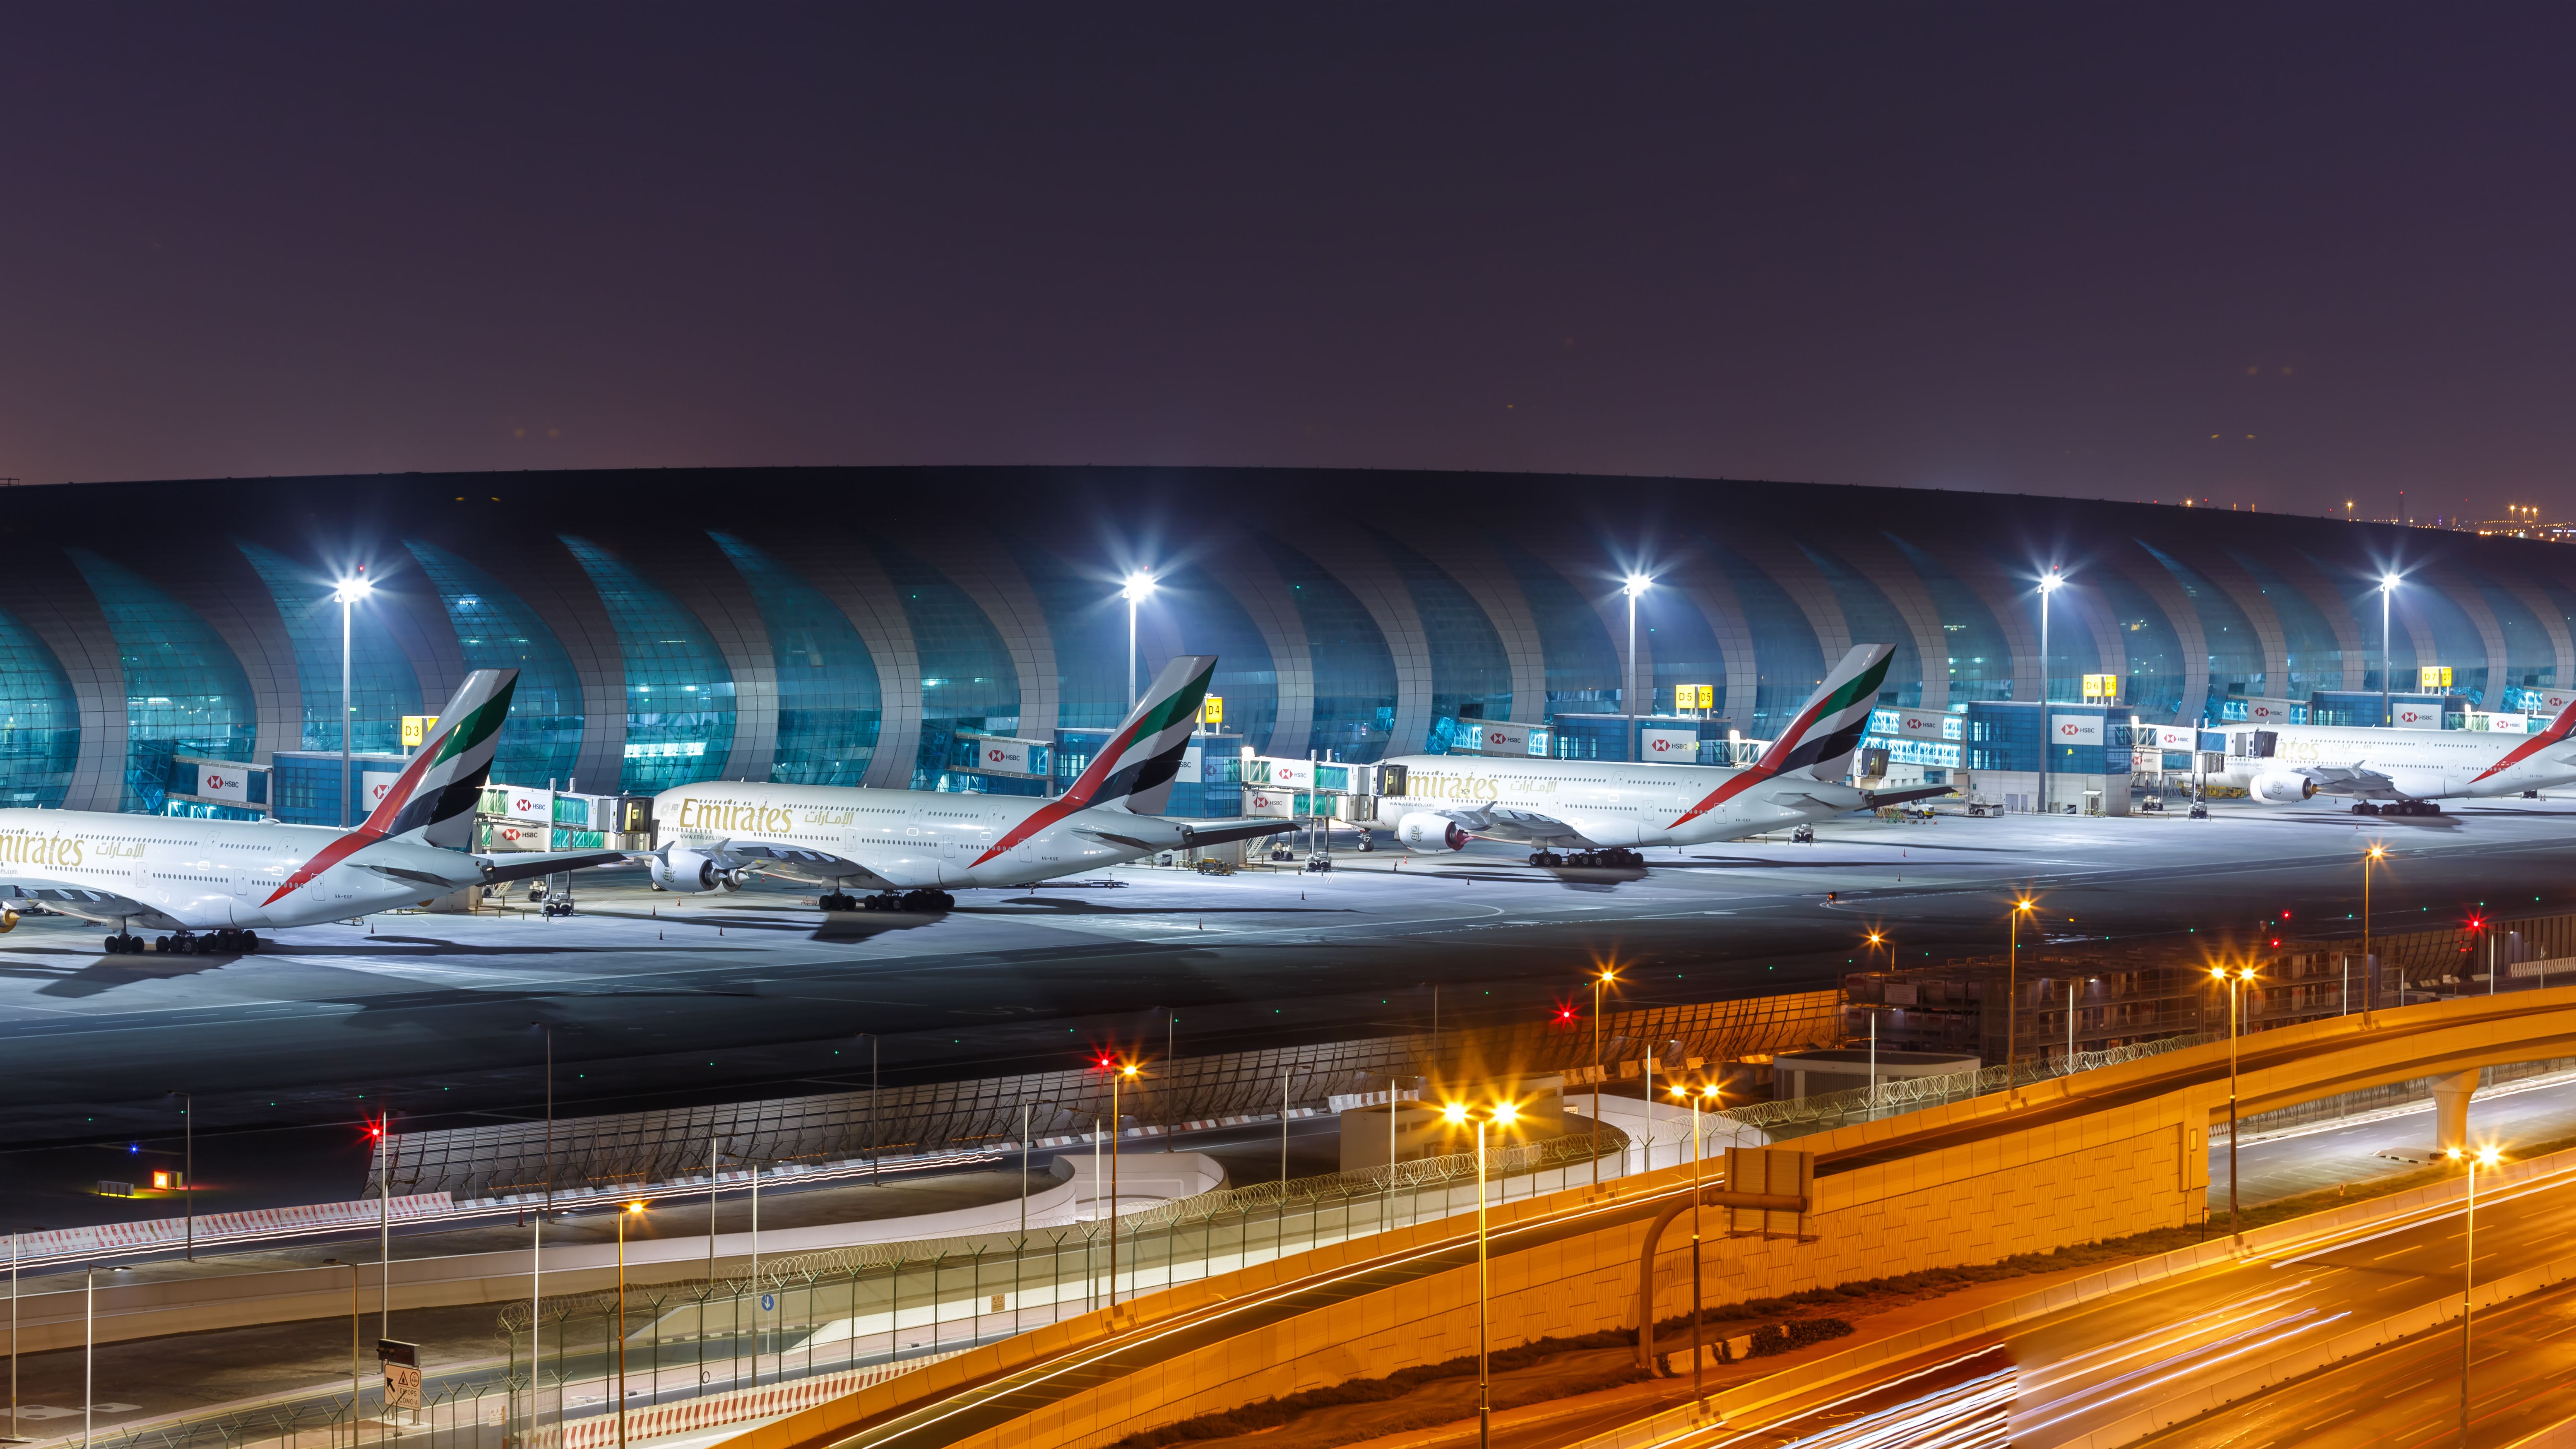 Emirates planes at Dubai International Airport